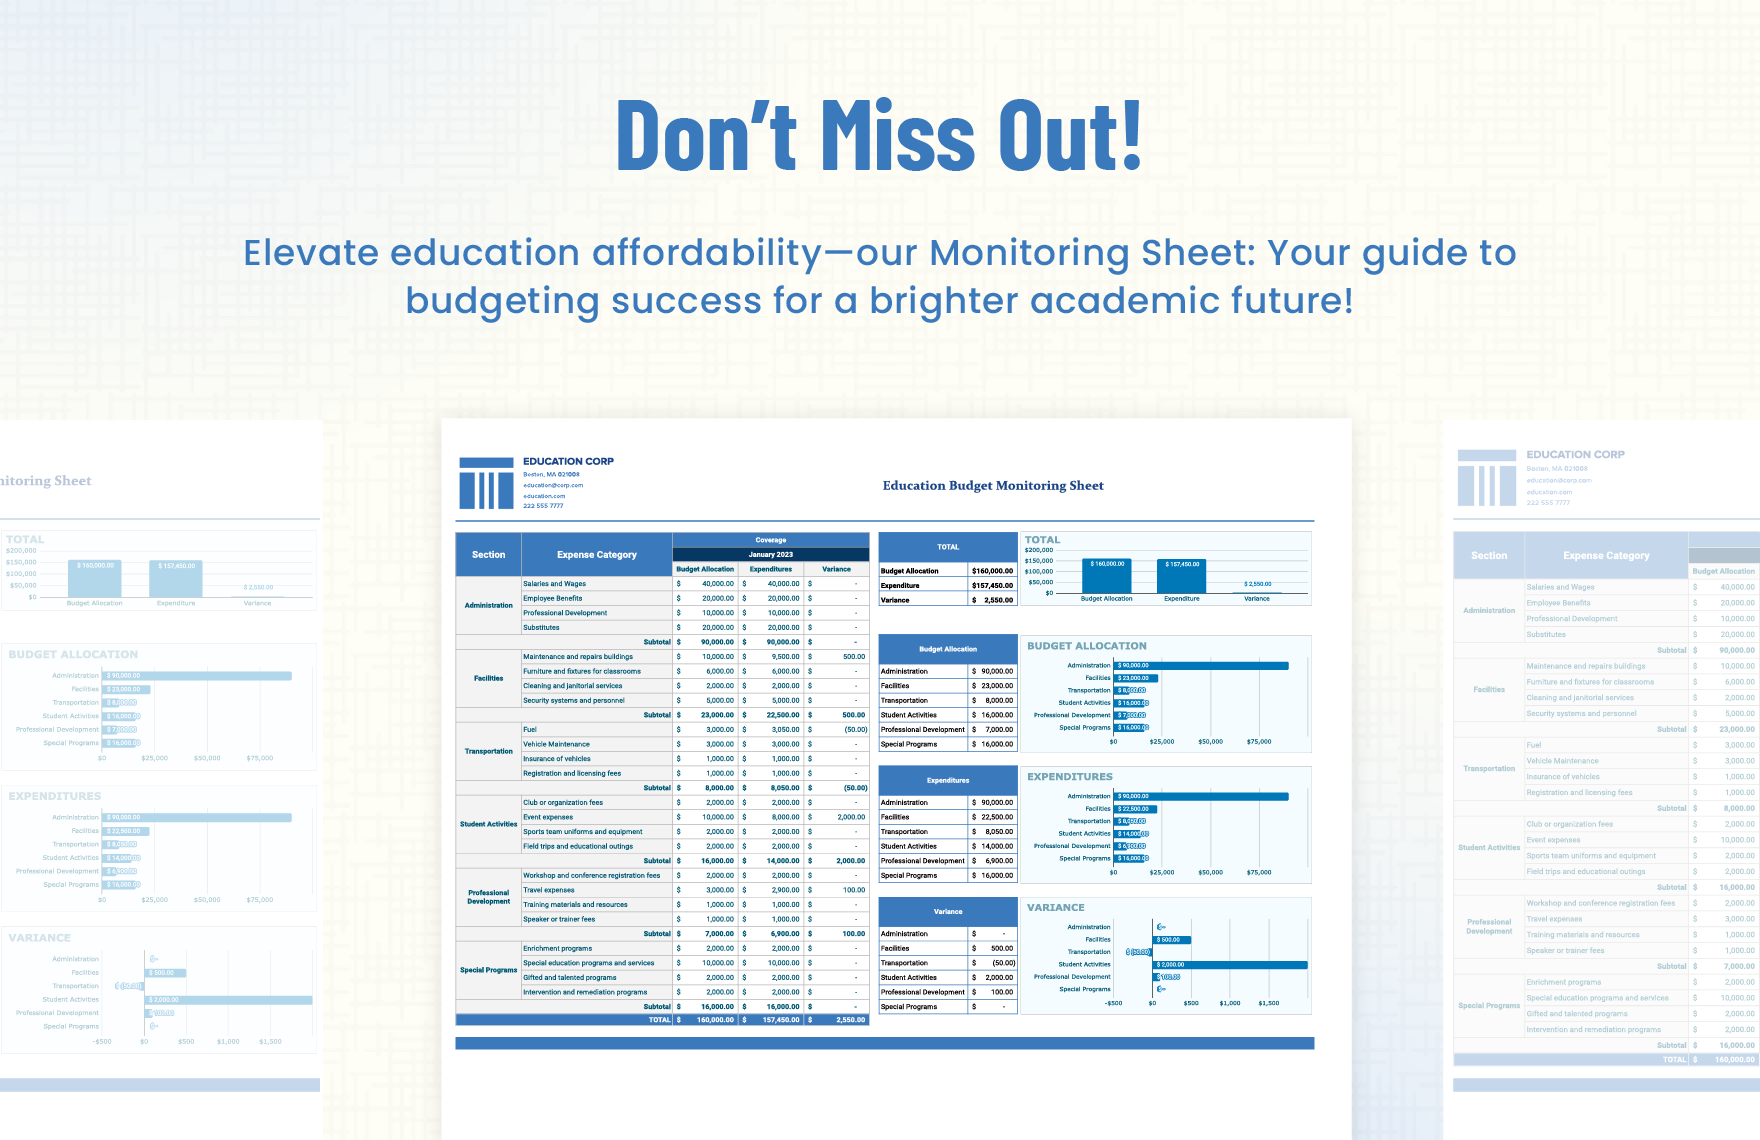 Education Budget Monitoring Sheet Template